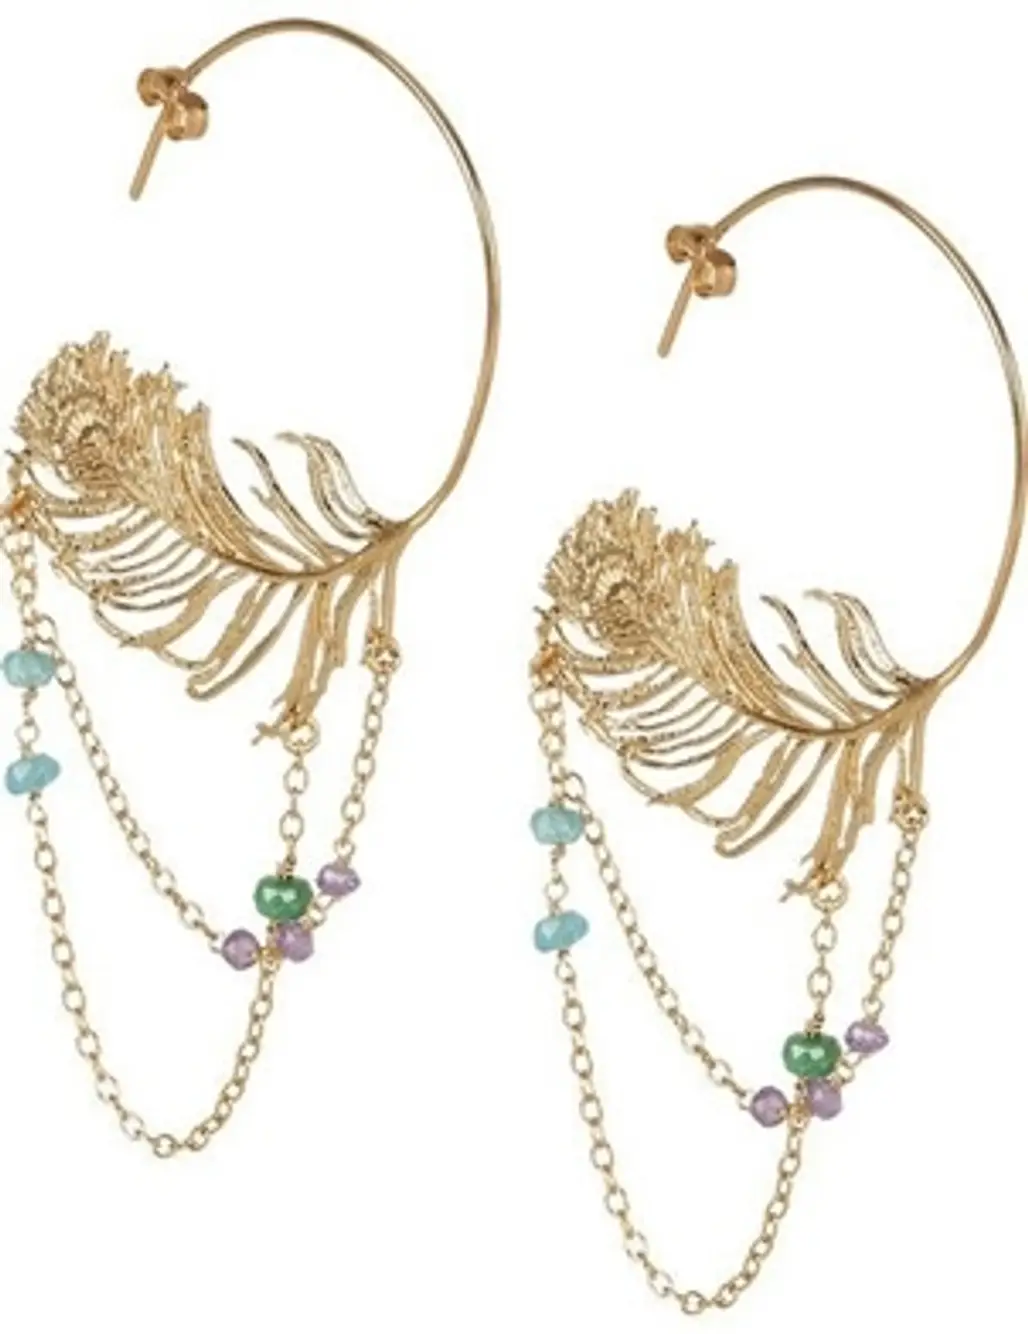 Alex Monroe 22-Karat Gold-Plated Peacock-Feather Hoop Earrings